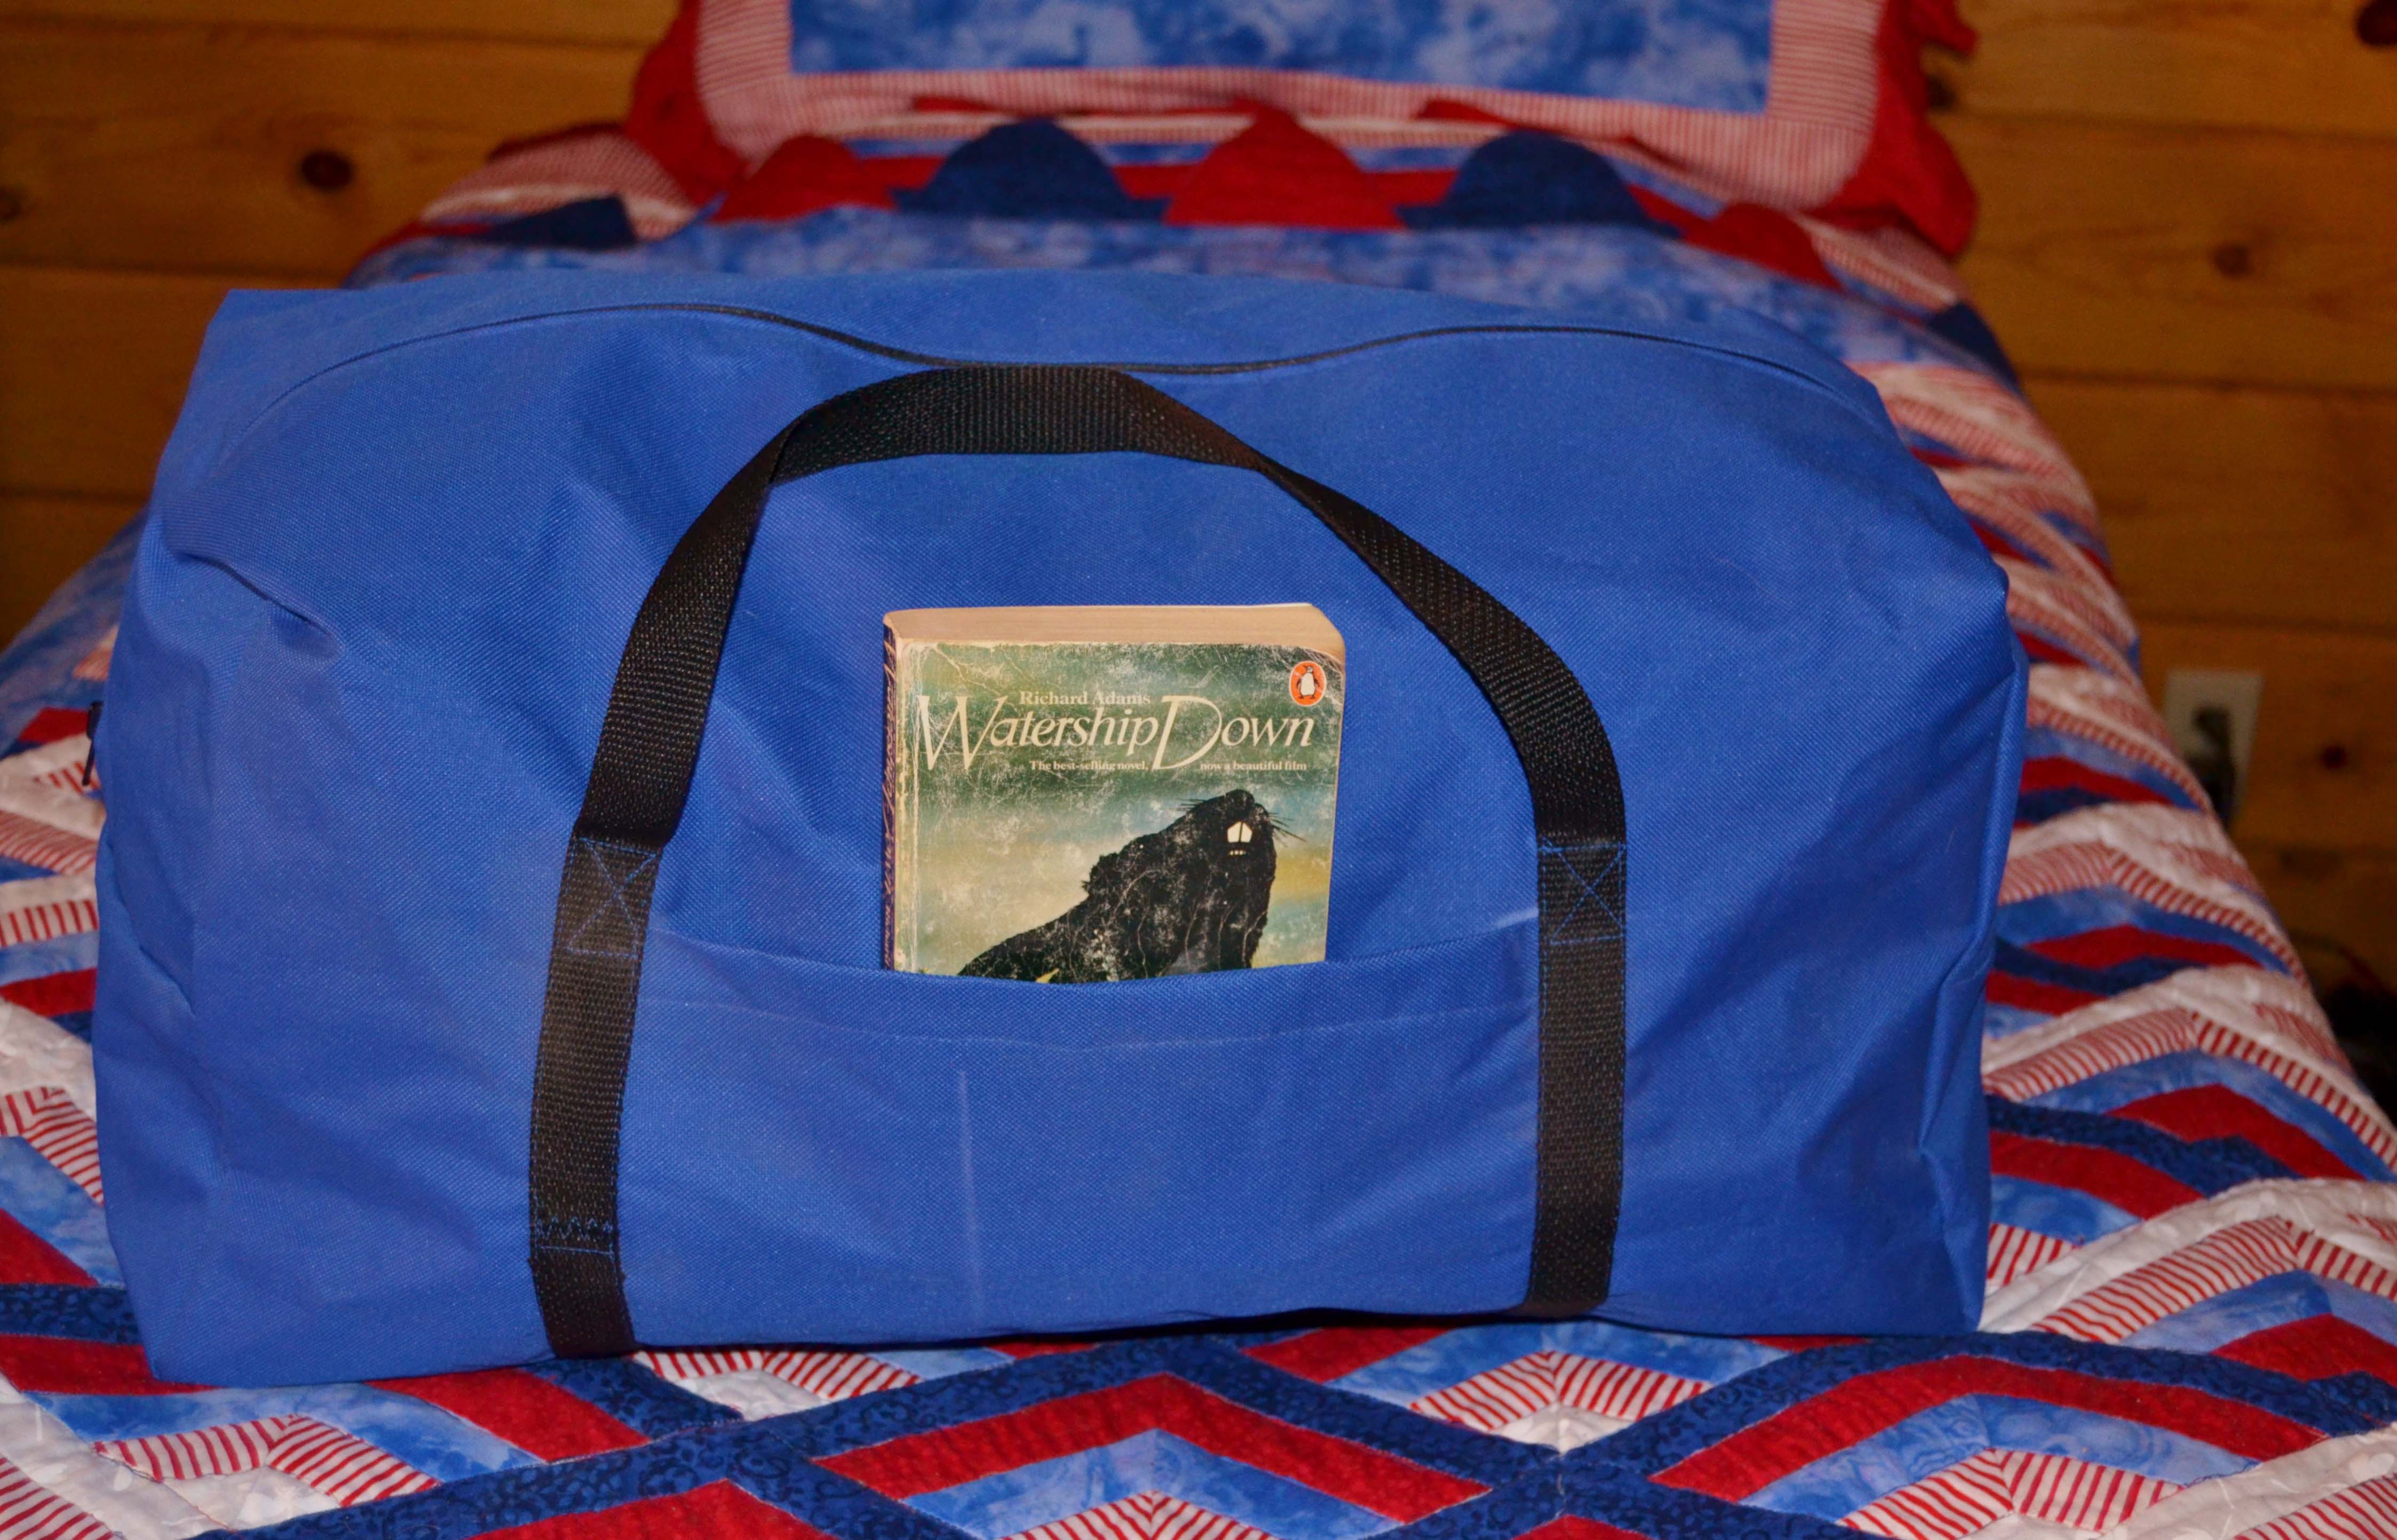 Shows a blue and black custom duffle bag